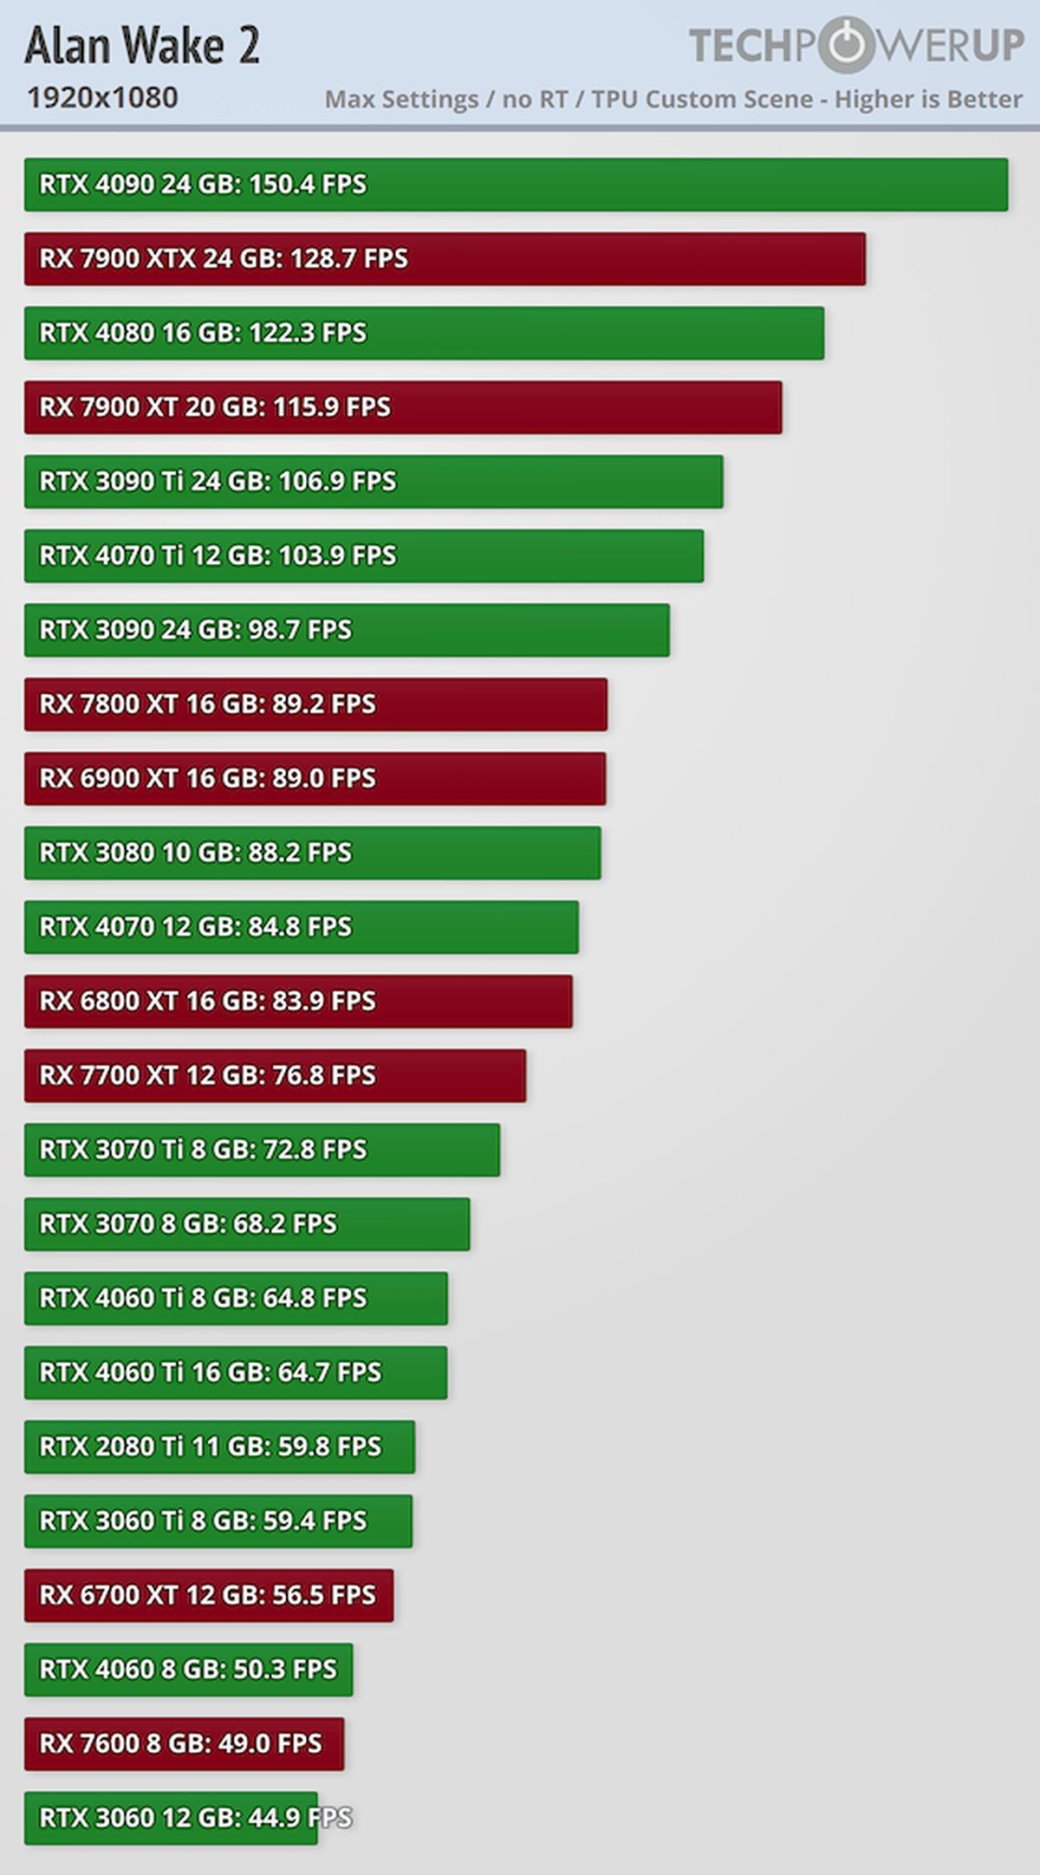 Галерея Производительность Alan Wake 2 сравнили на 25 видеокартах от AMD и NVIDIA - 9 фото